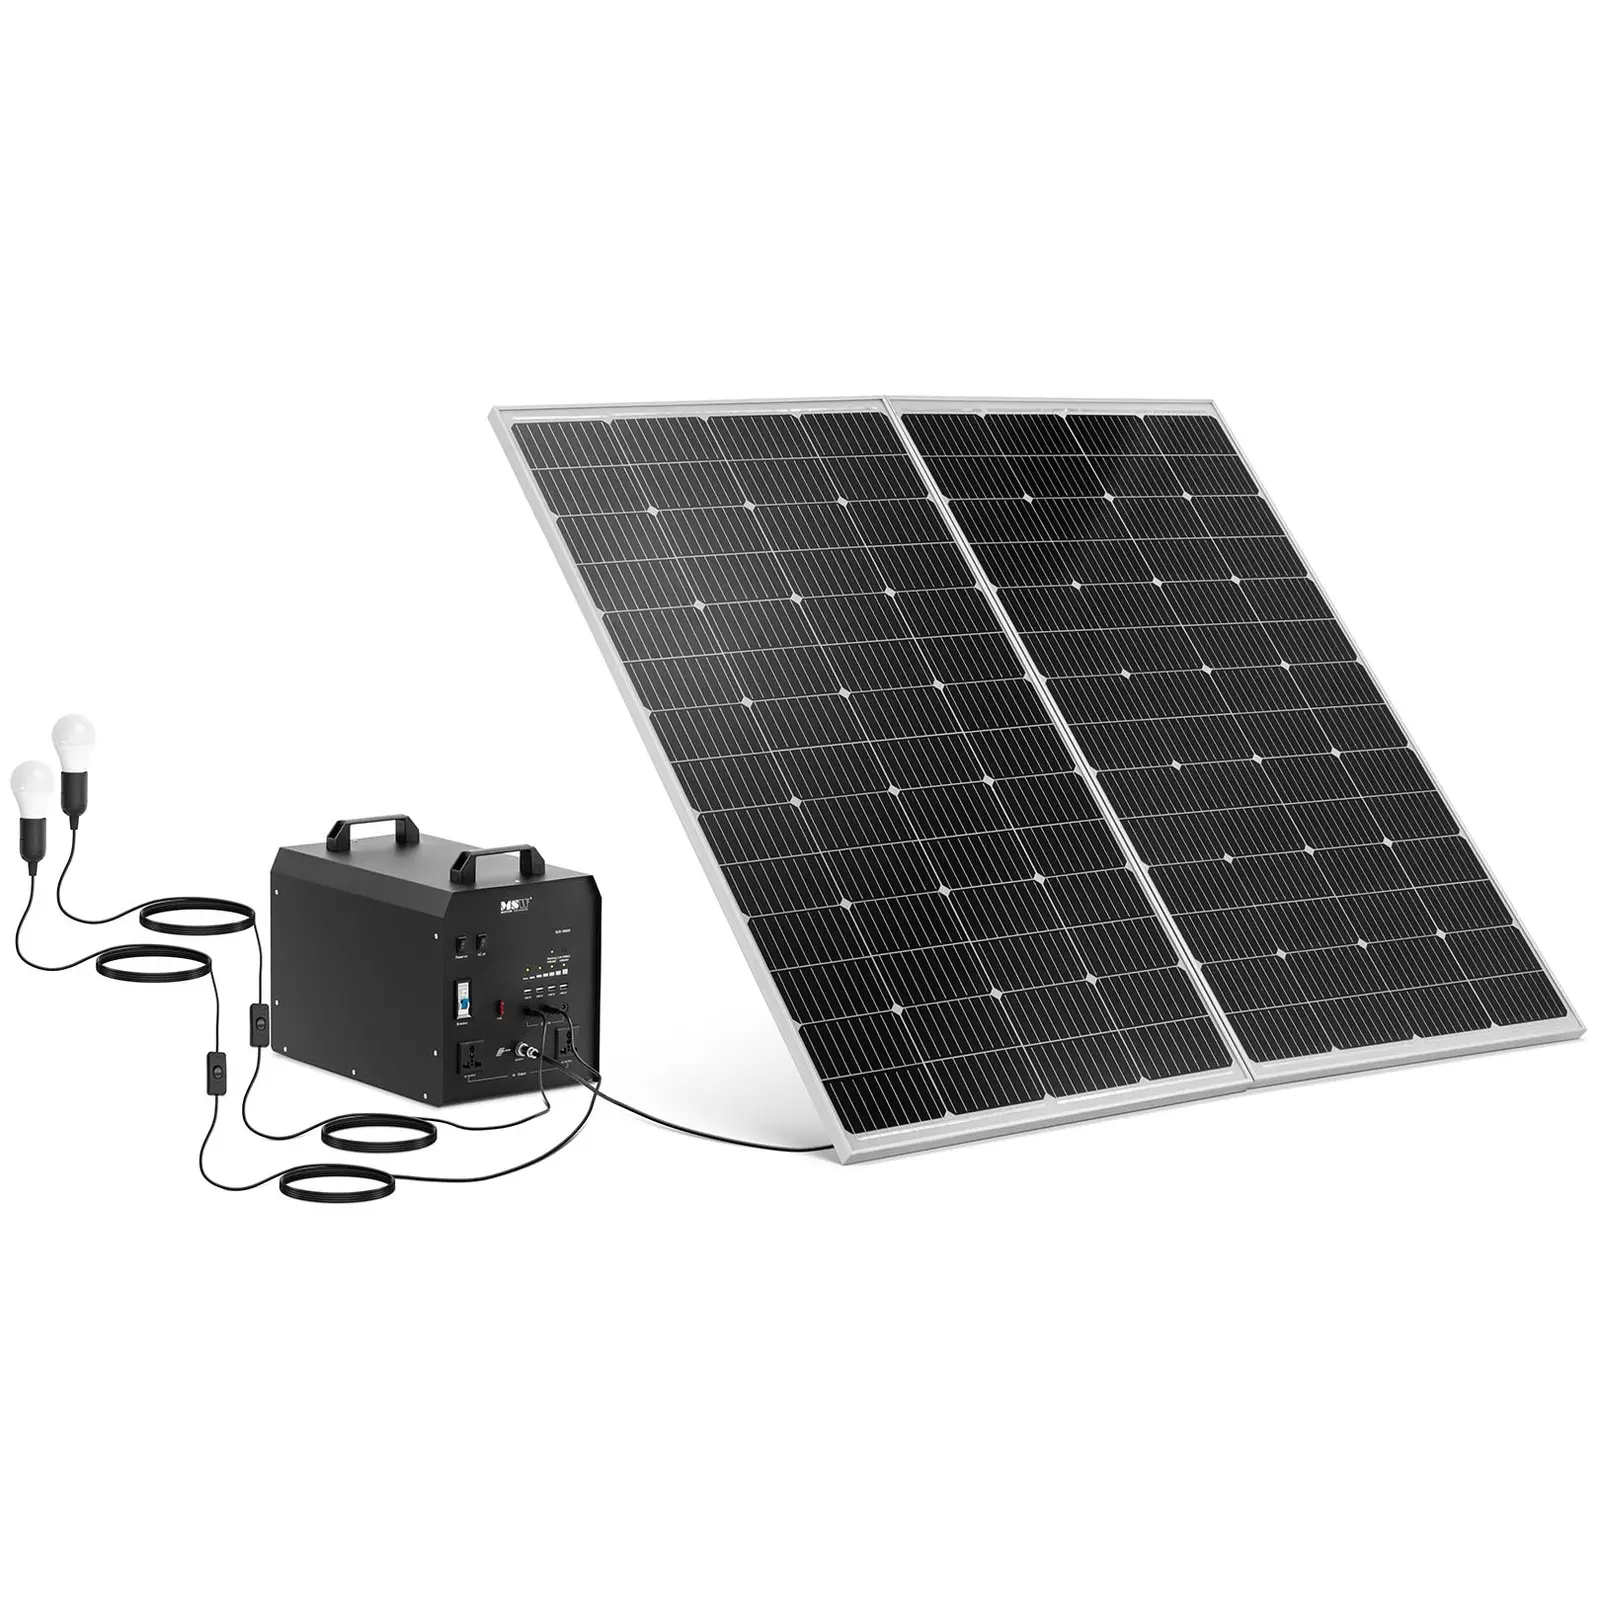 Sistema de energía solar portátil con panel e inversor - 1800 W - 5 / 12 /230 V - 2 luces LED